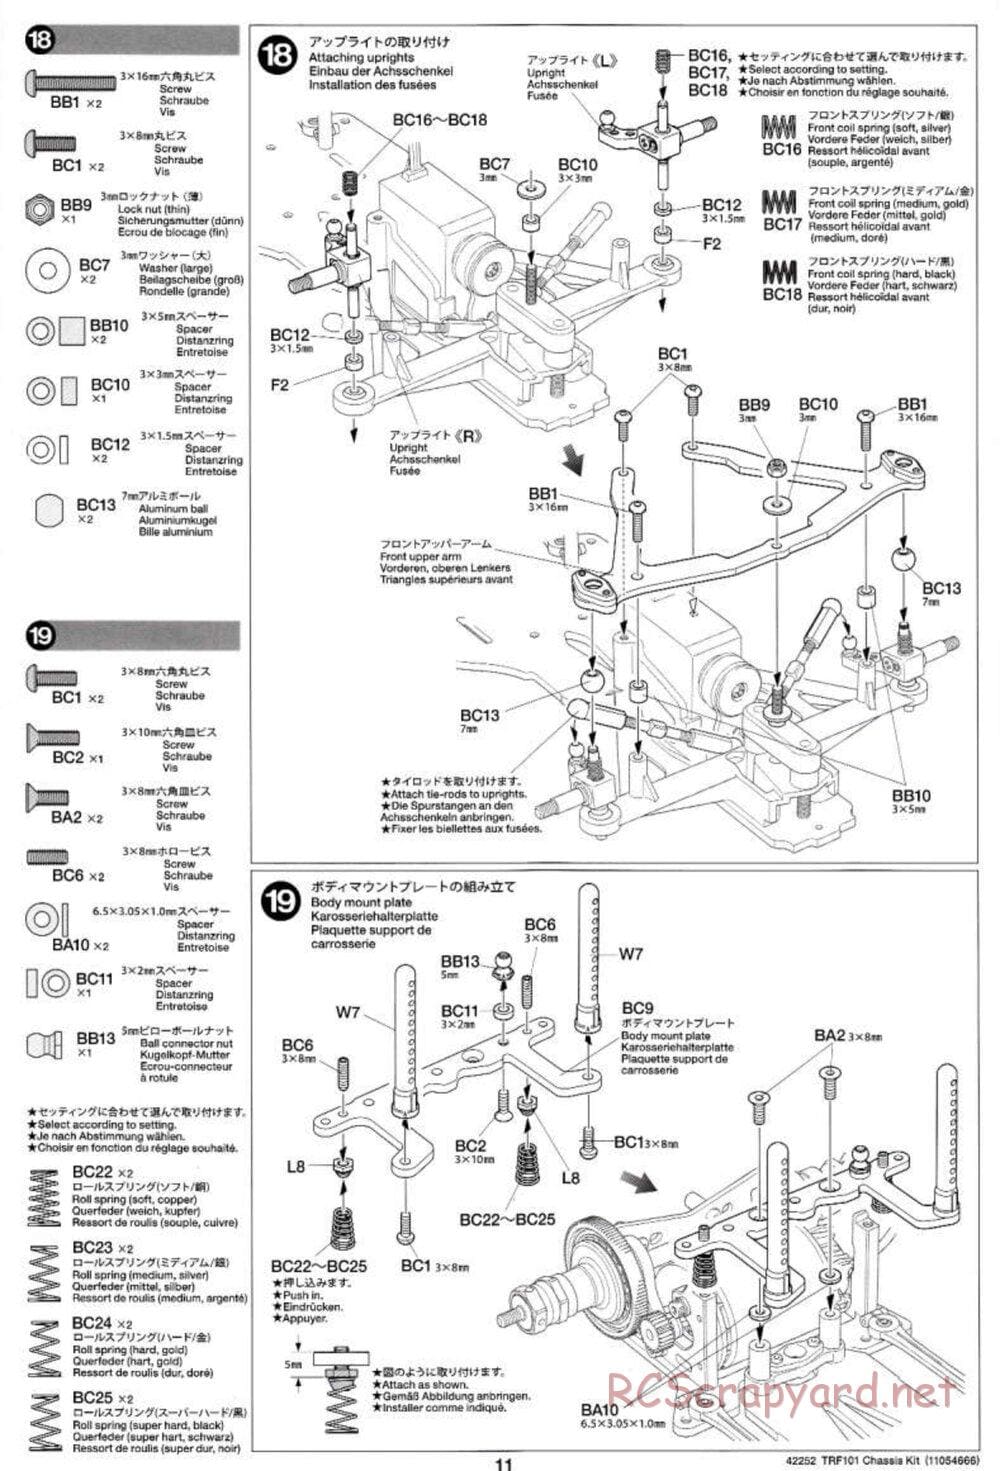 Tamiya - TRF101 Chassis - Manual - Page 11